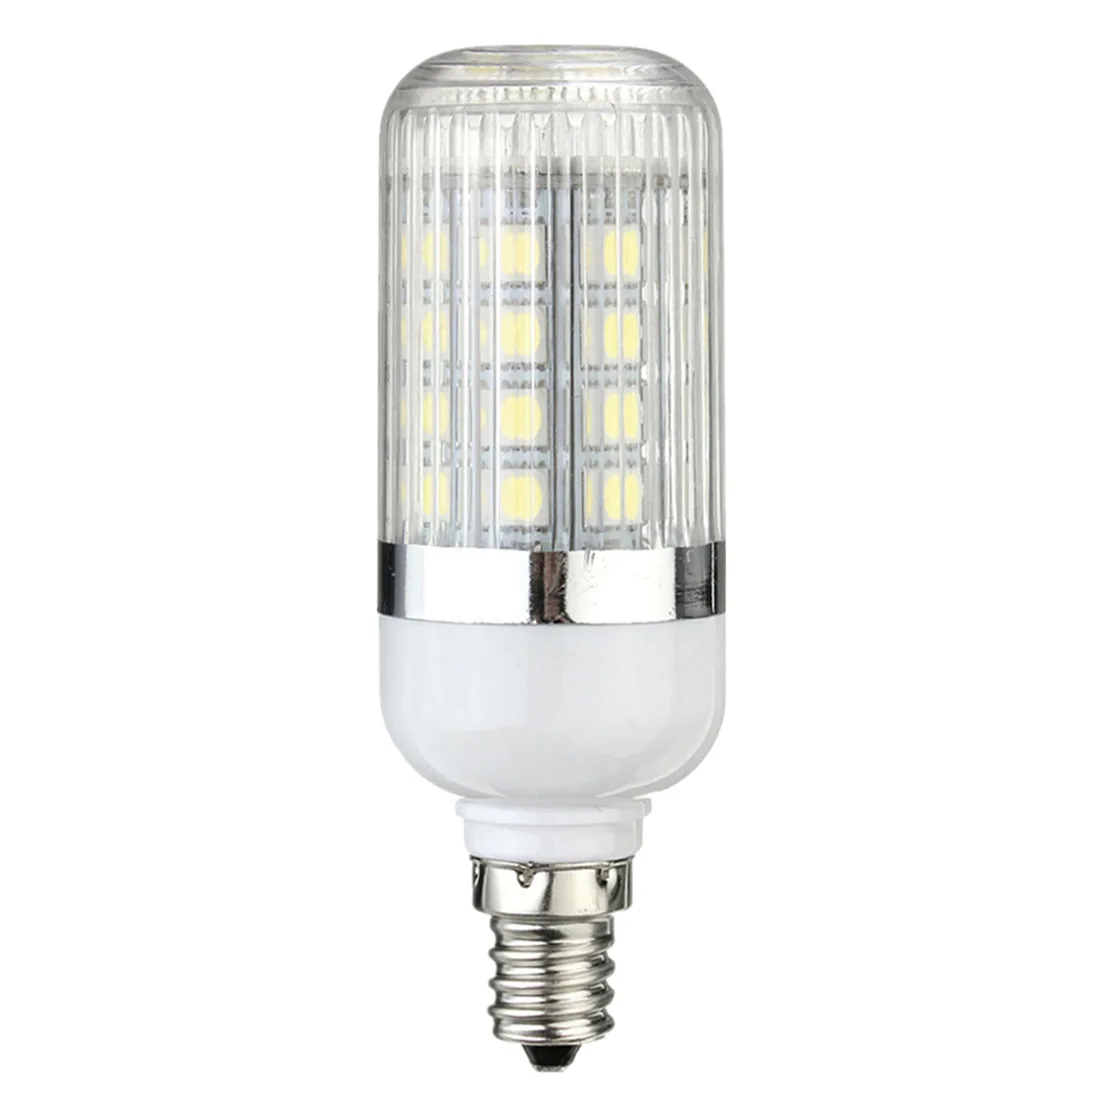 

E12 5W Non Dimmable 36 SMD 5050 LED Corn Light Bulb Lamp Color Temperature:Pure White(6000-6500K) Amount:10 Pcs